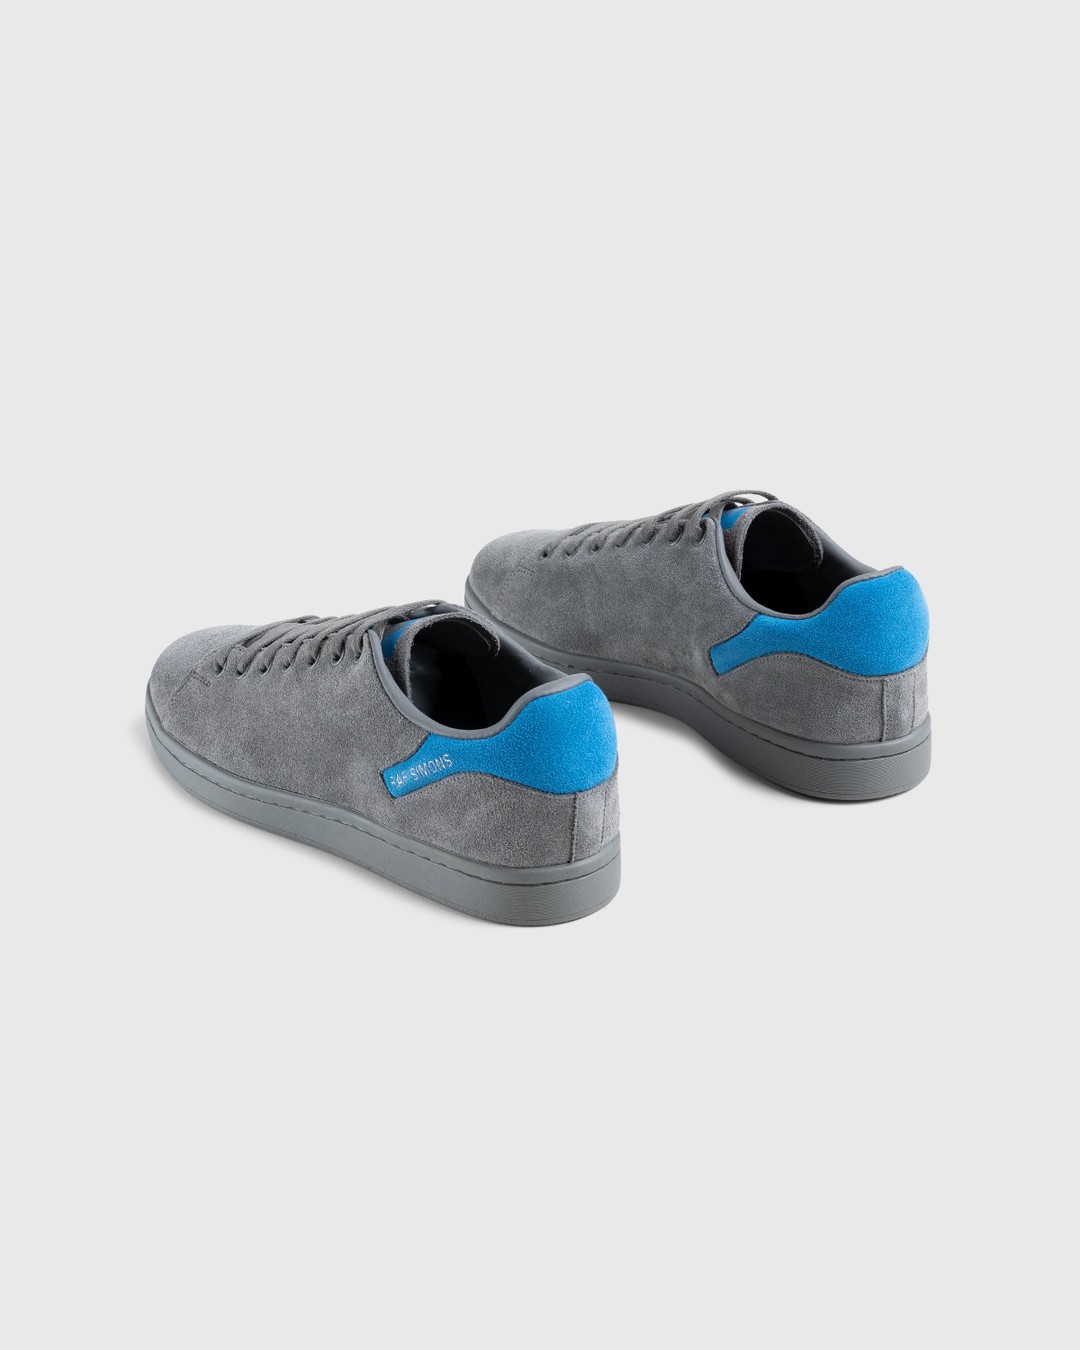 Raf Simons – Orion Grey - Sneakers - Grey - Image 4